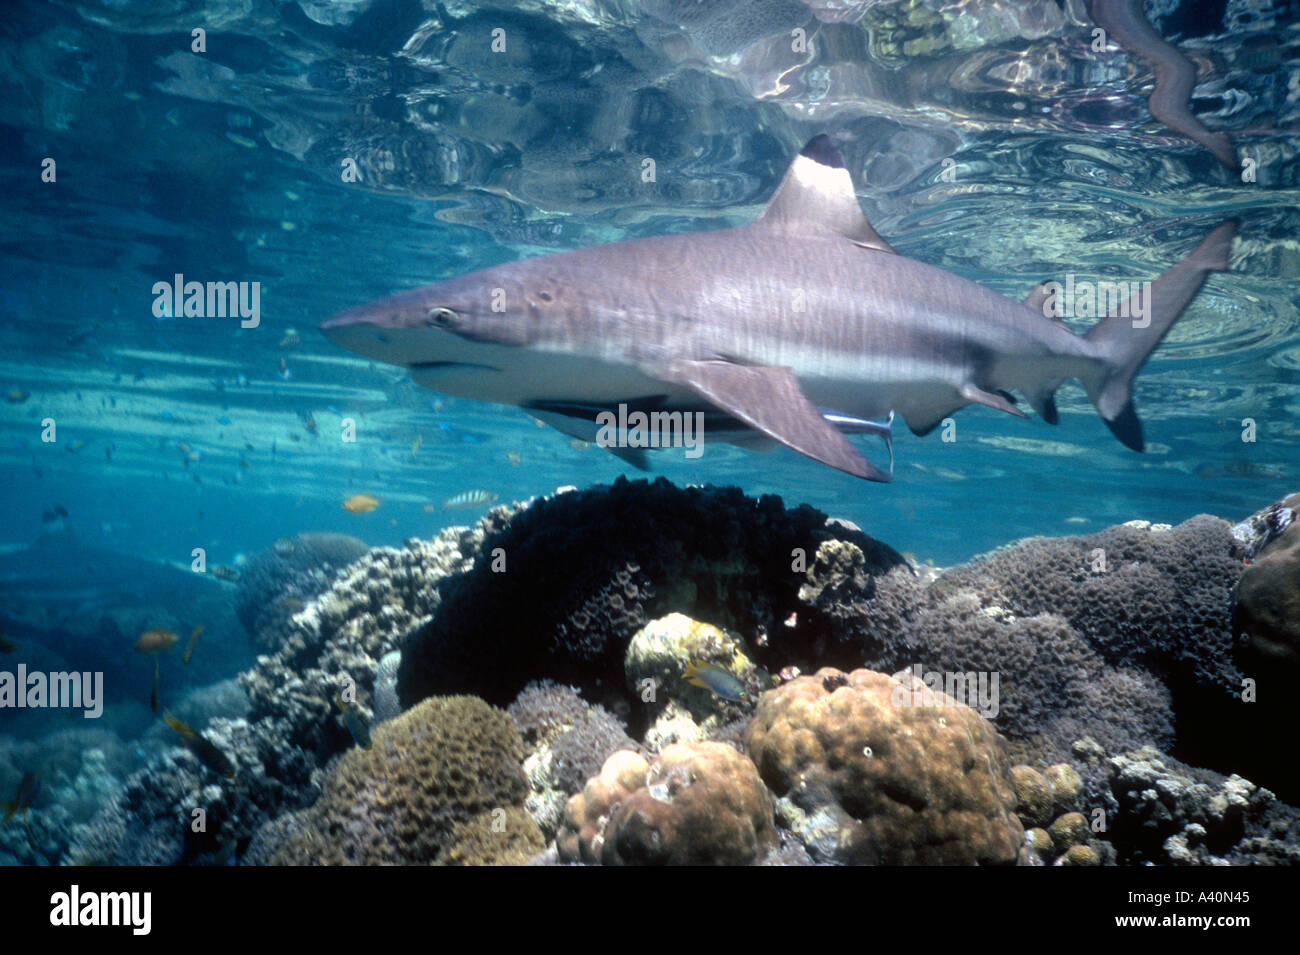 Blacktip Reef Shark, Carcharhinus melanoptera, with Remora or slender suckerfish, Echeneis naucrates. Stock Photo